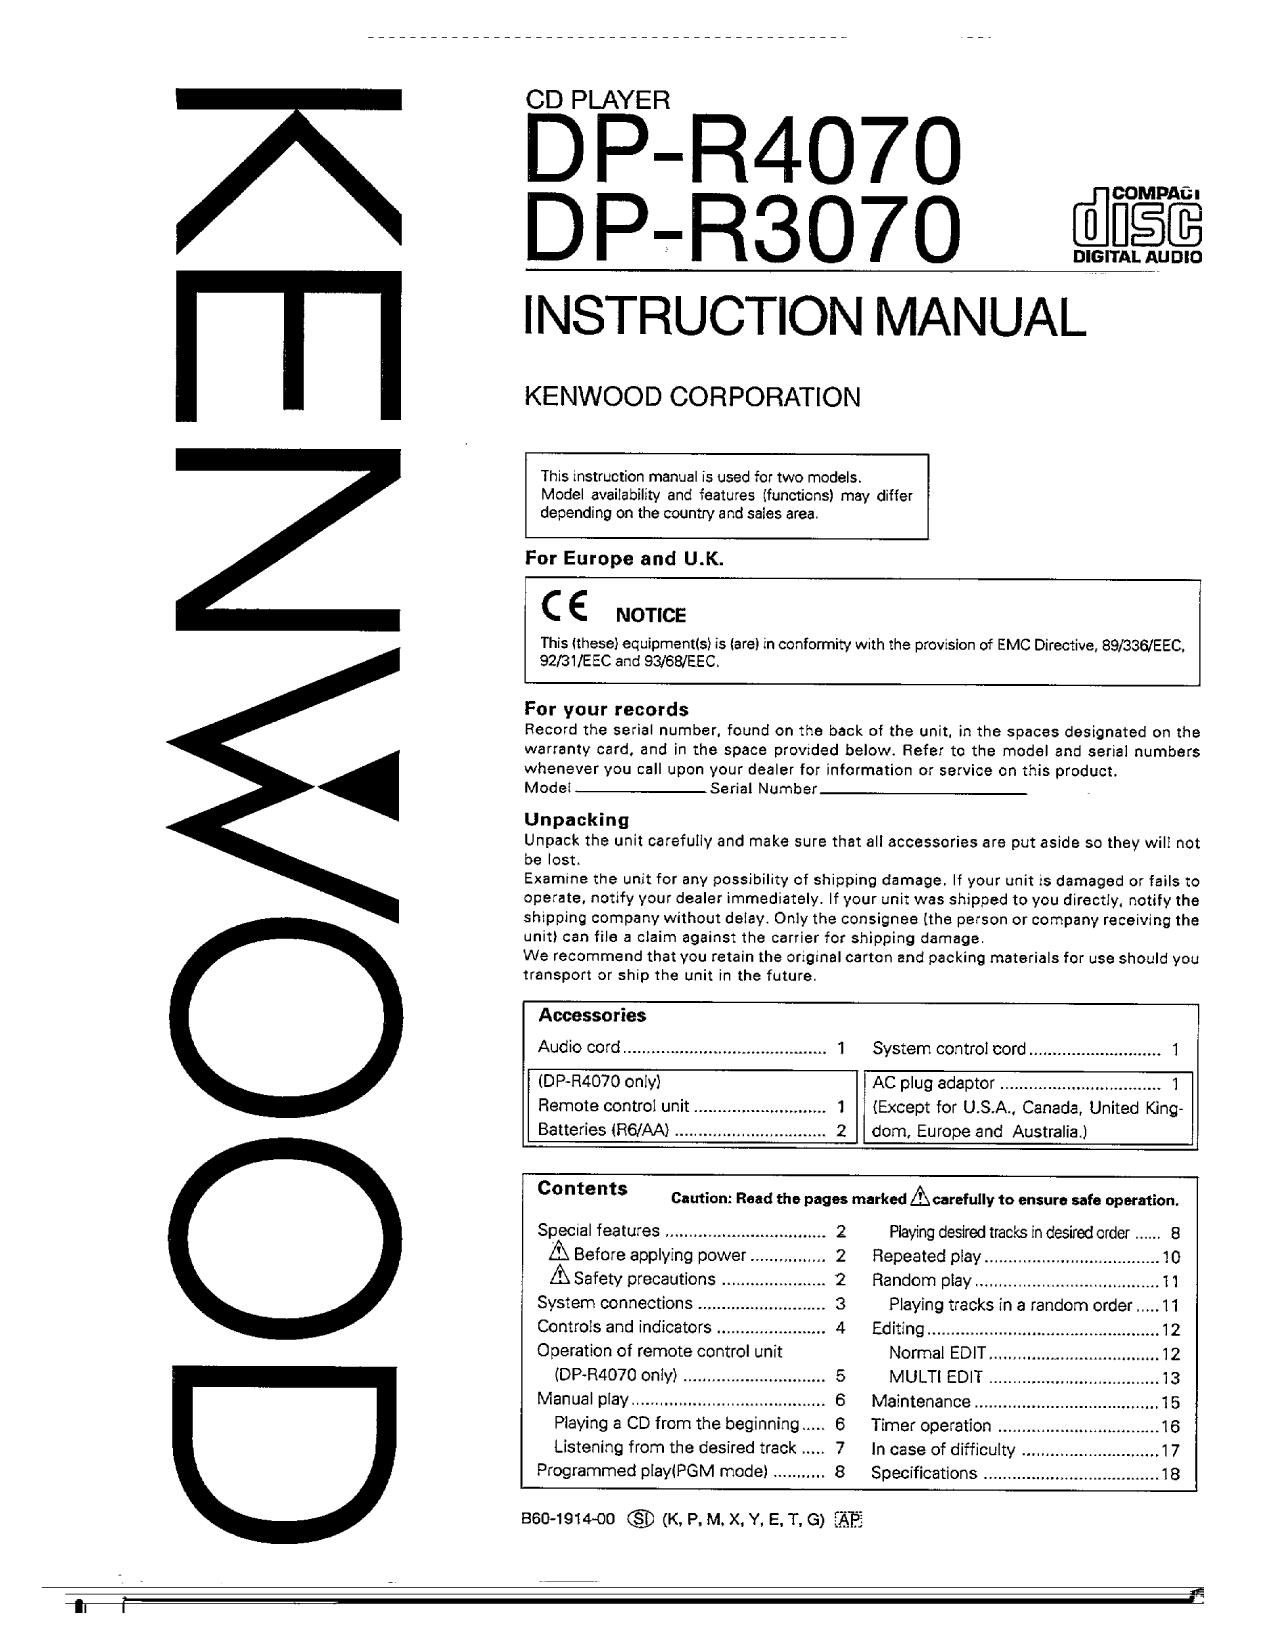 Kenwood DPR 4070 Owners Manual